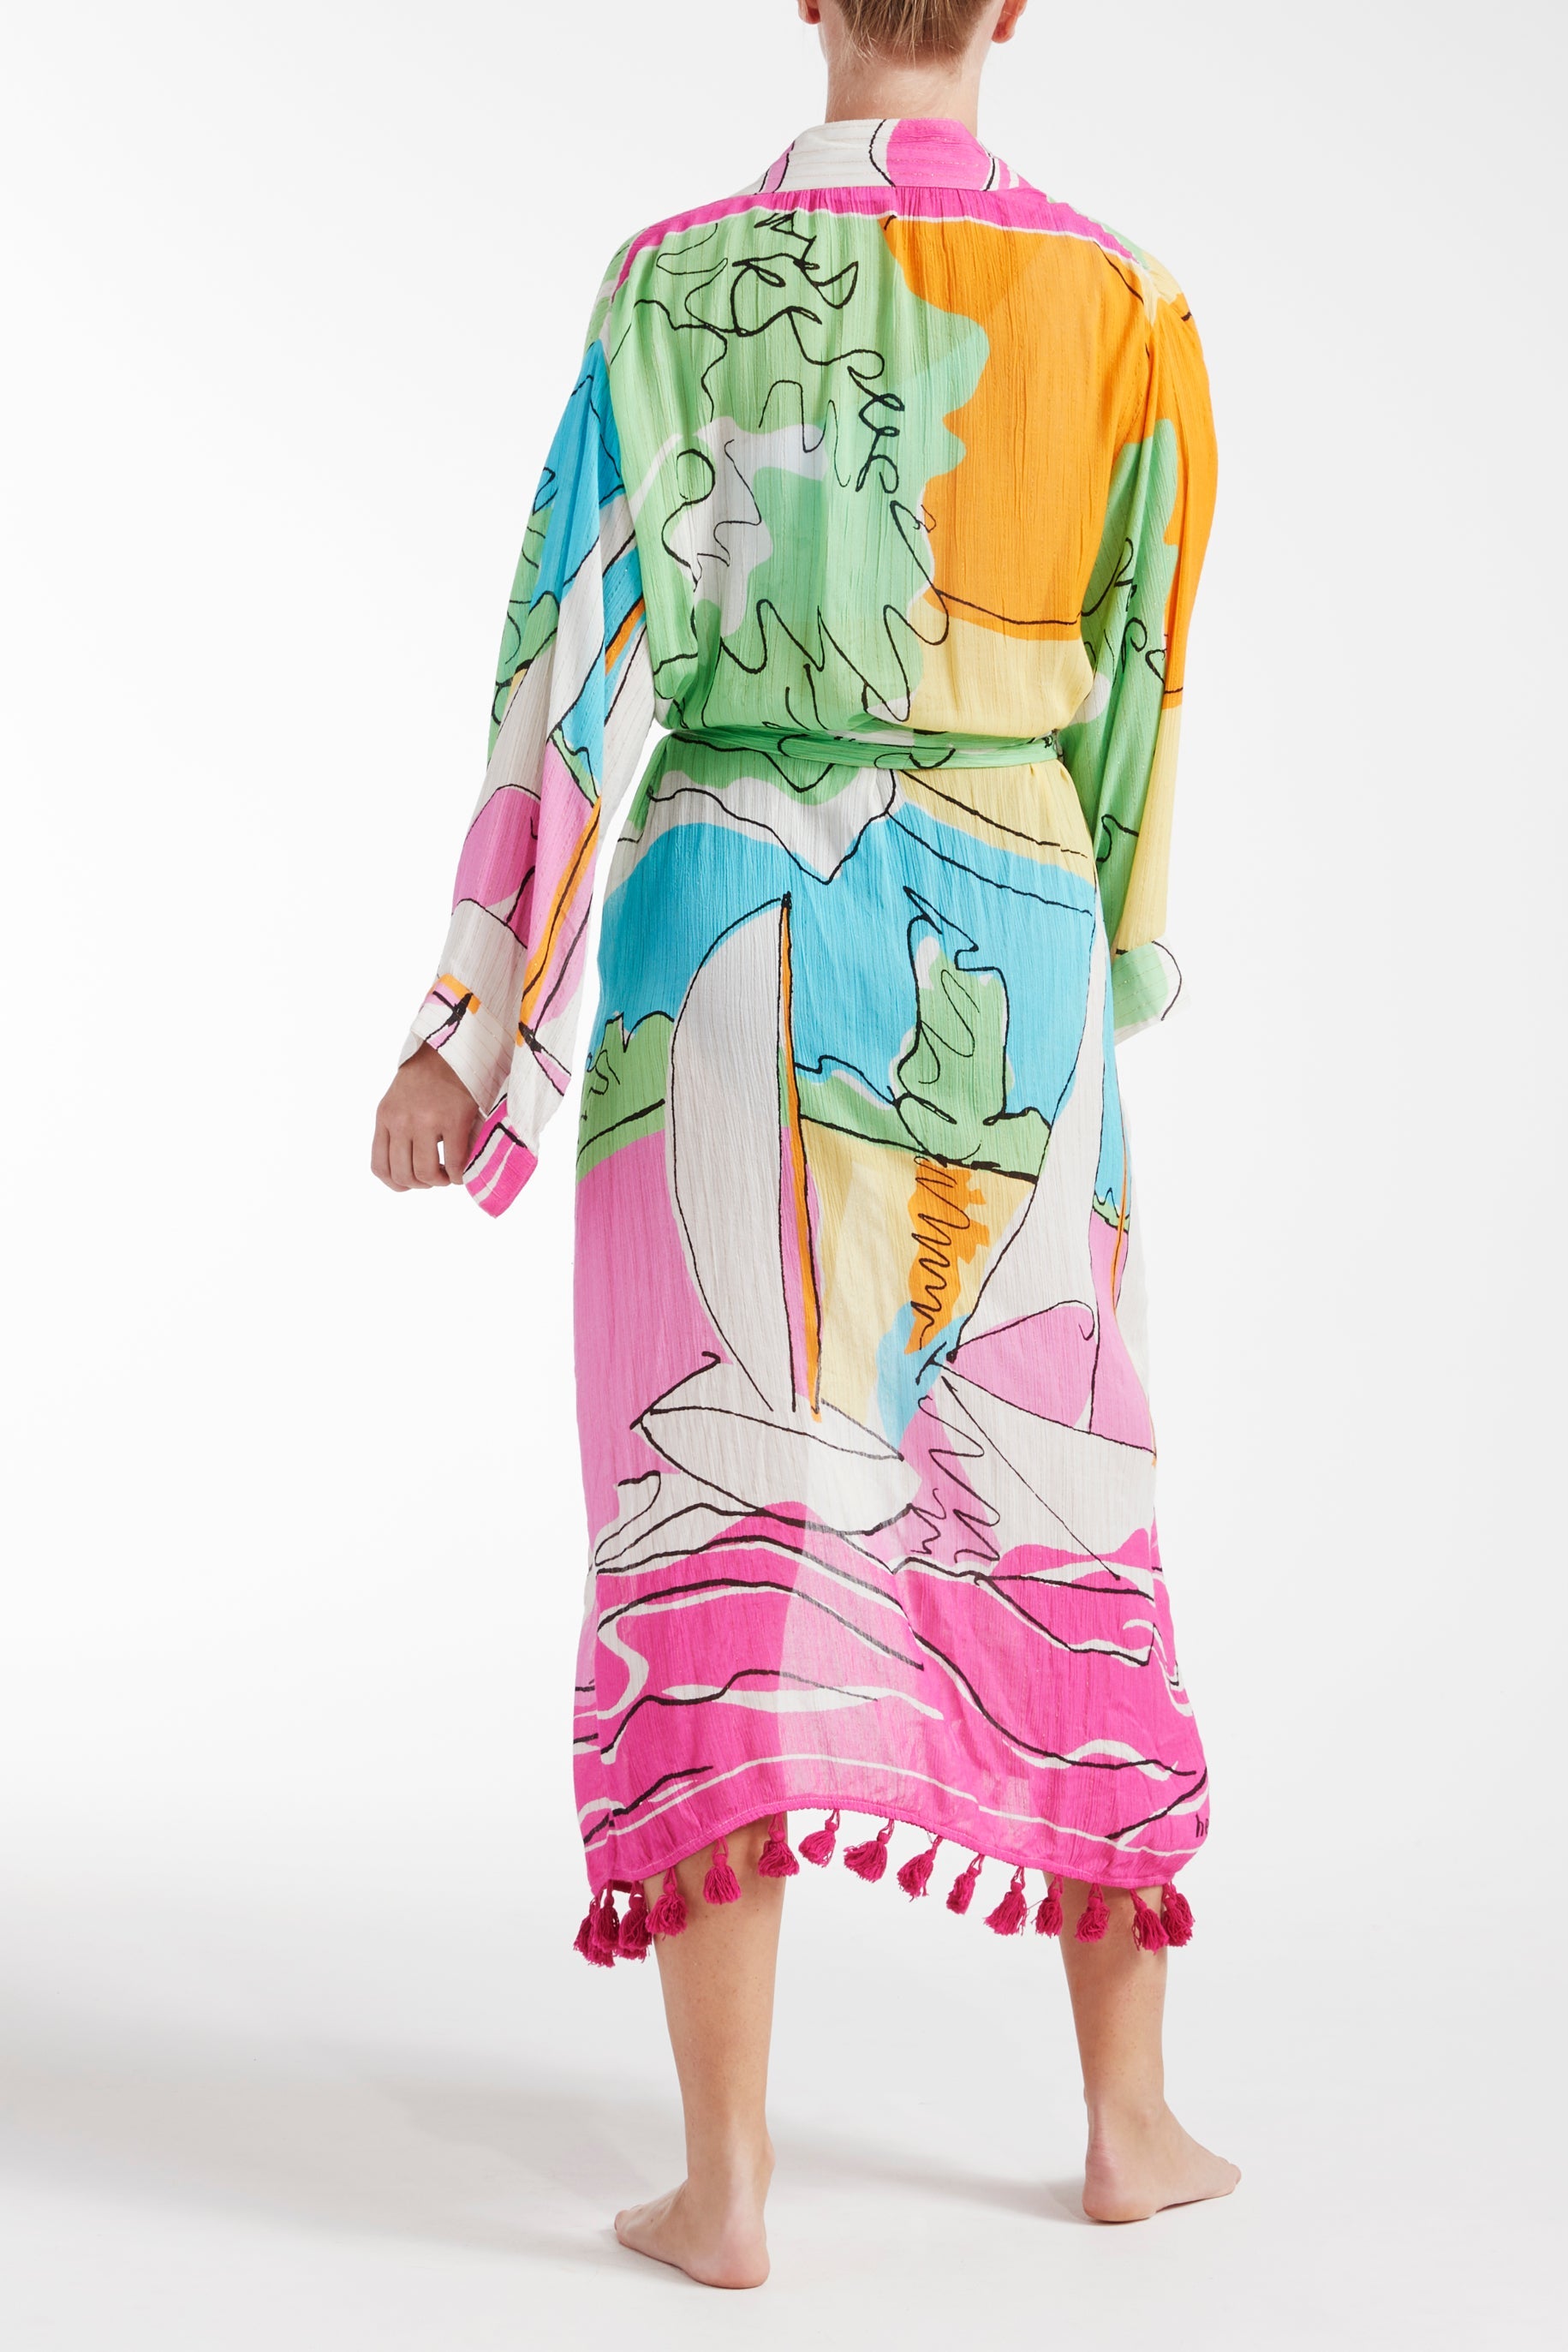 Noelle Fringe Robe by Hermoza